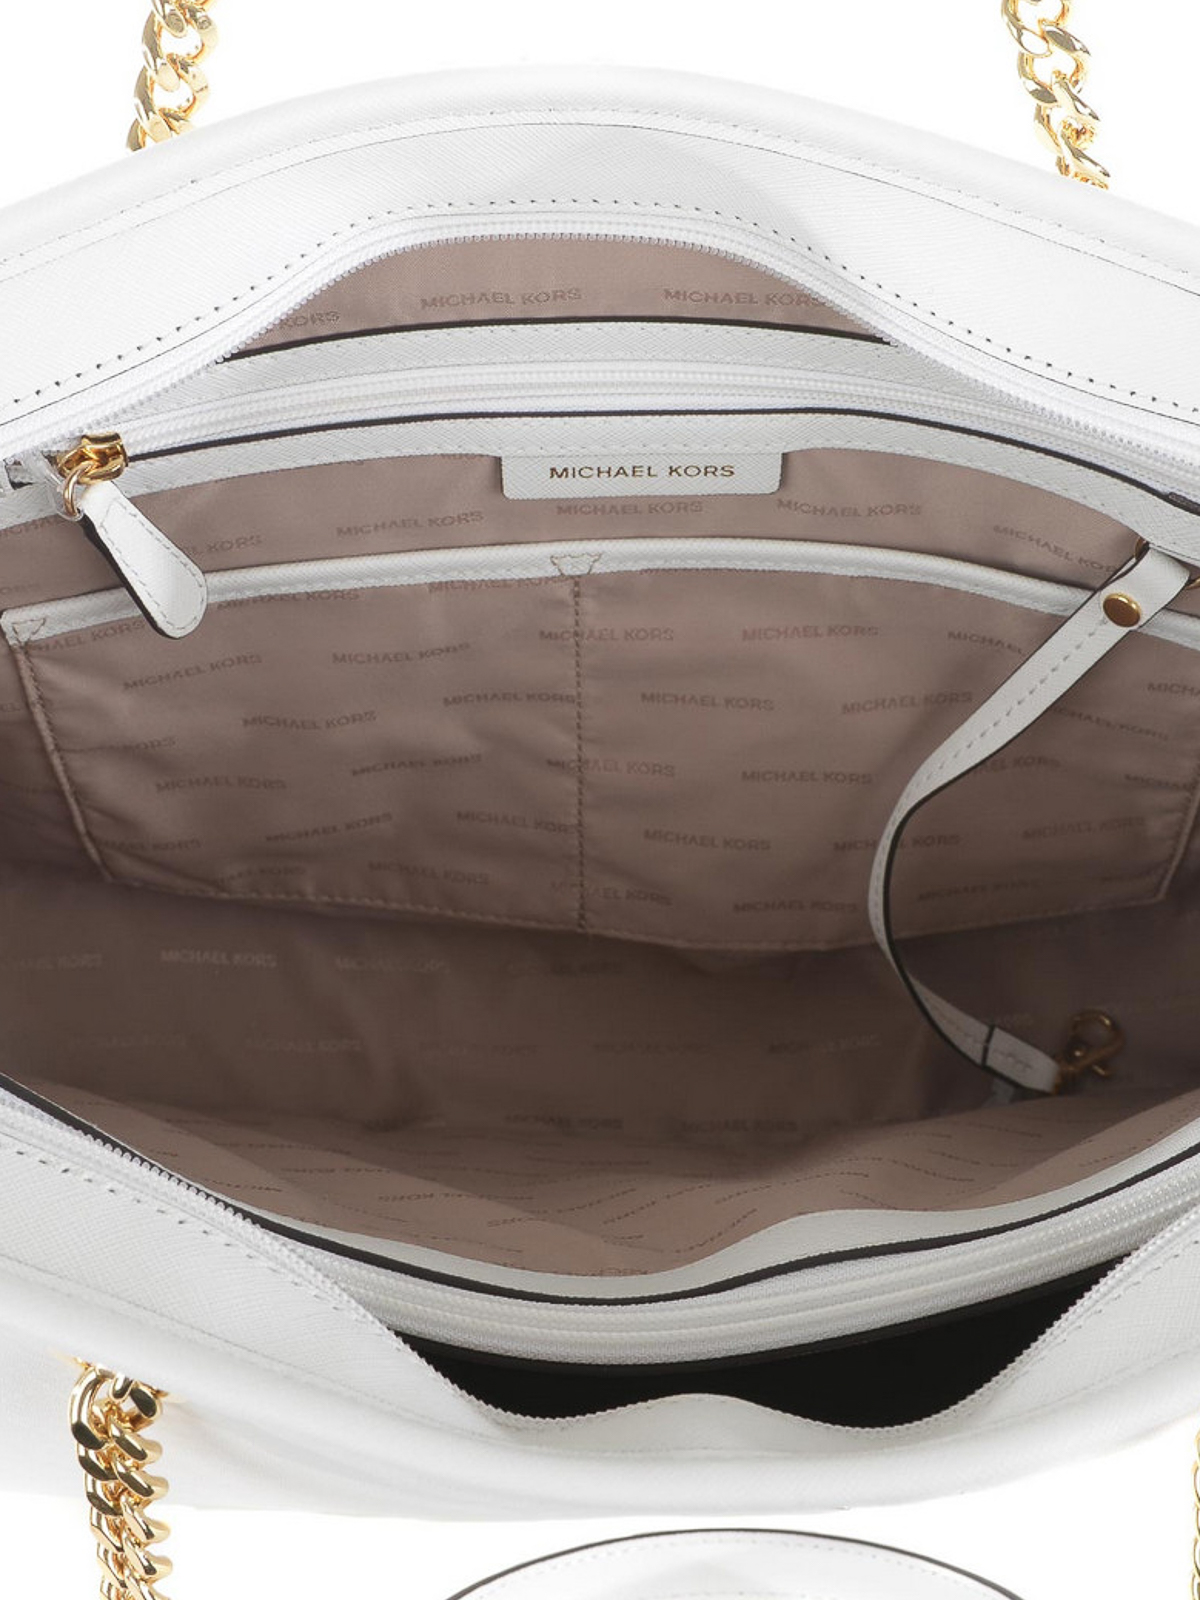 Michael Michael Kors Jet Set Travel Chain Medium Leather Tote Bag